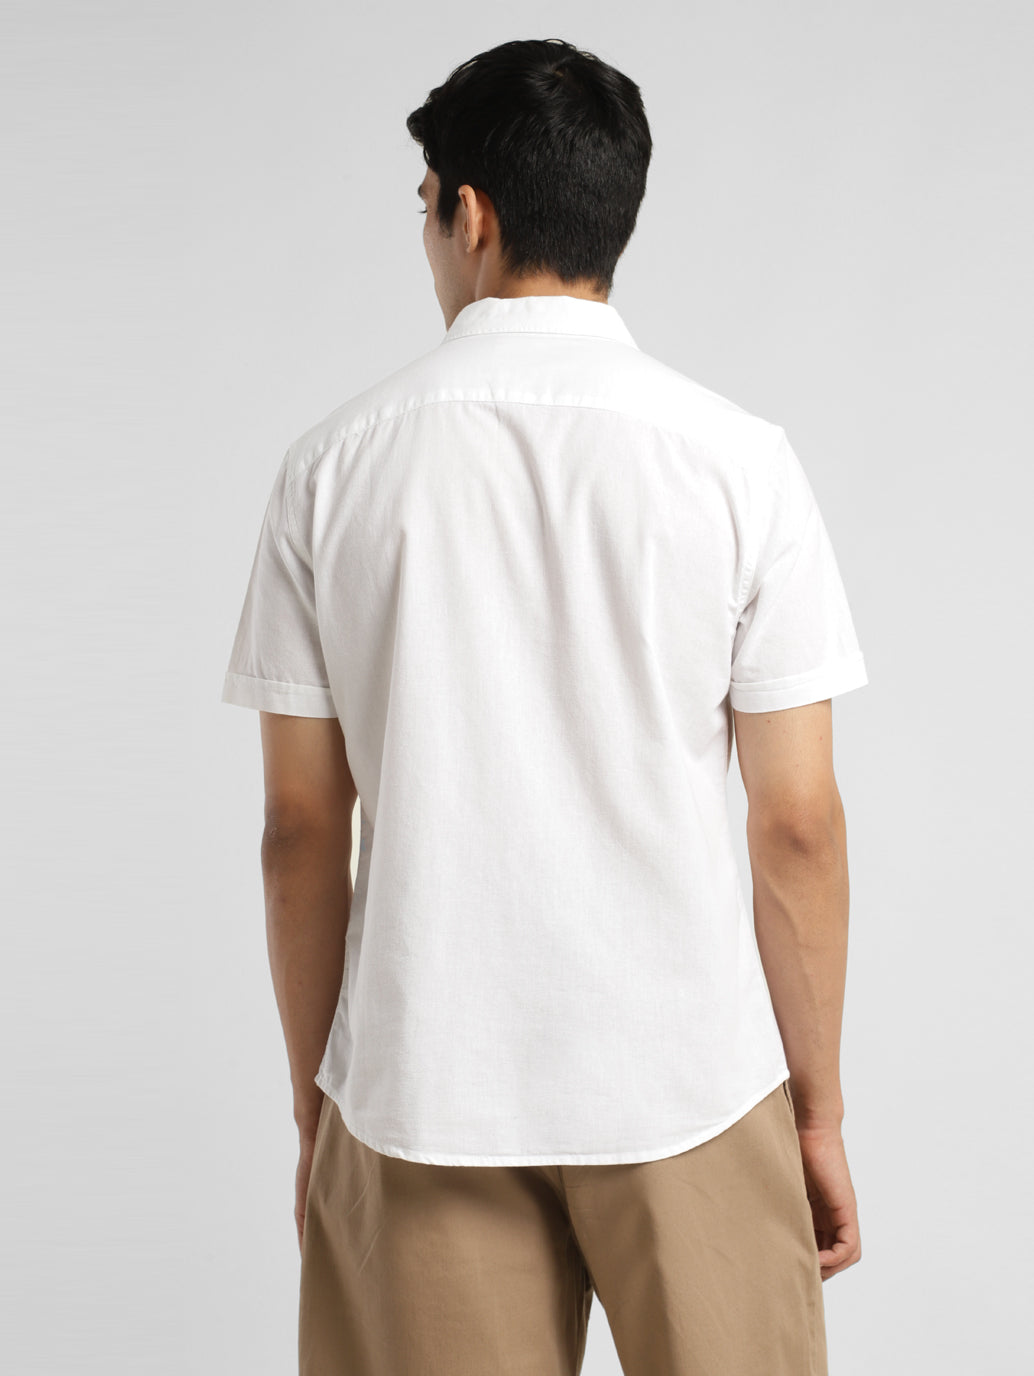 Men's Solid Slim Fit Shirt